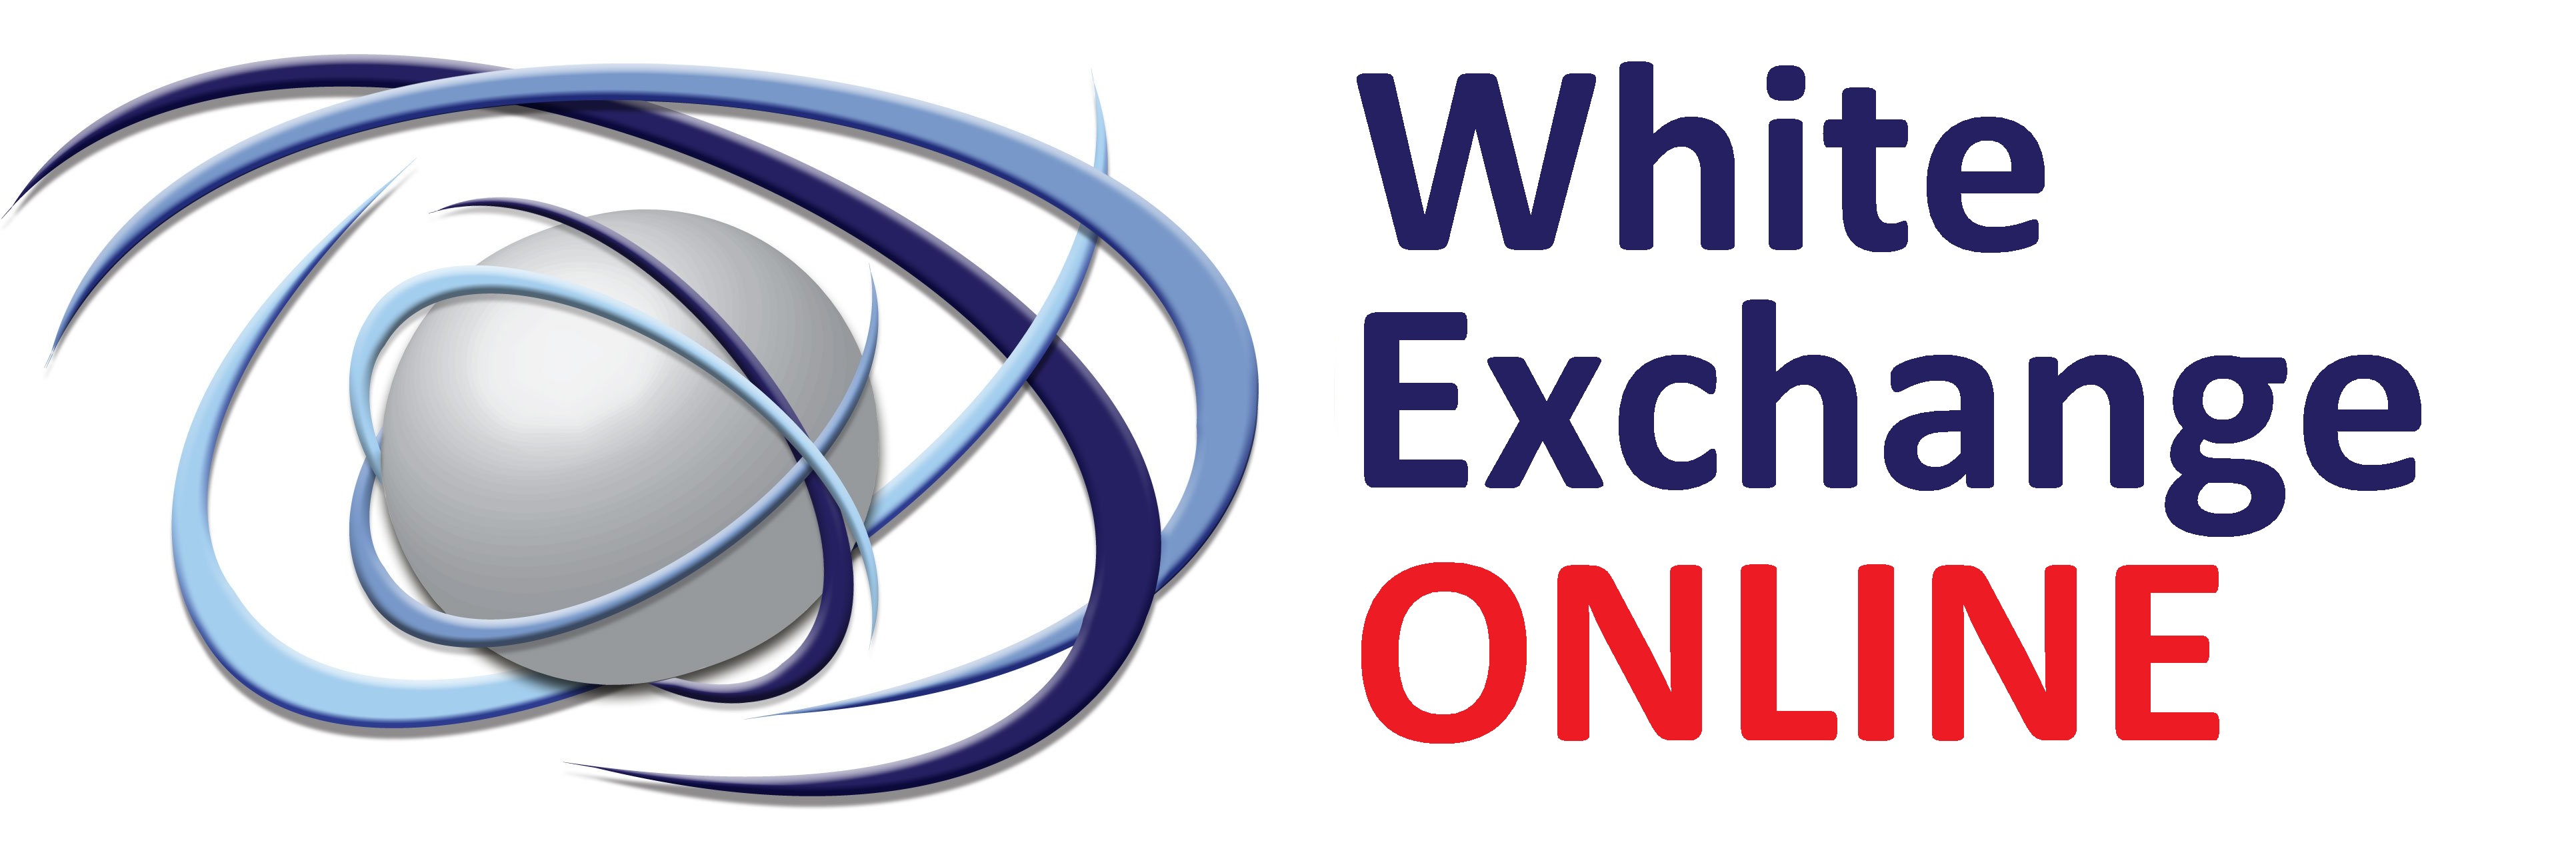 White Exchange Online